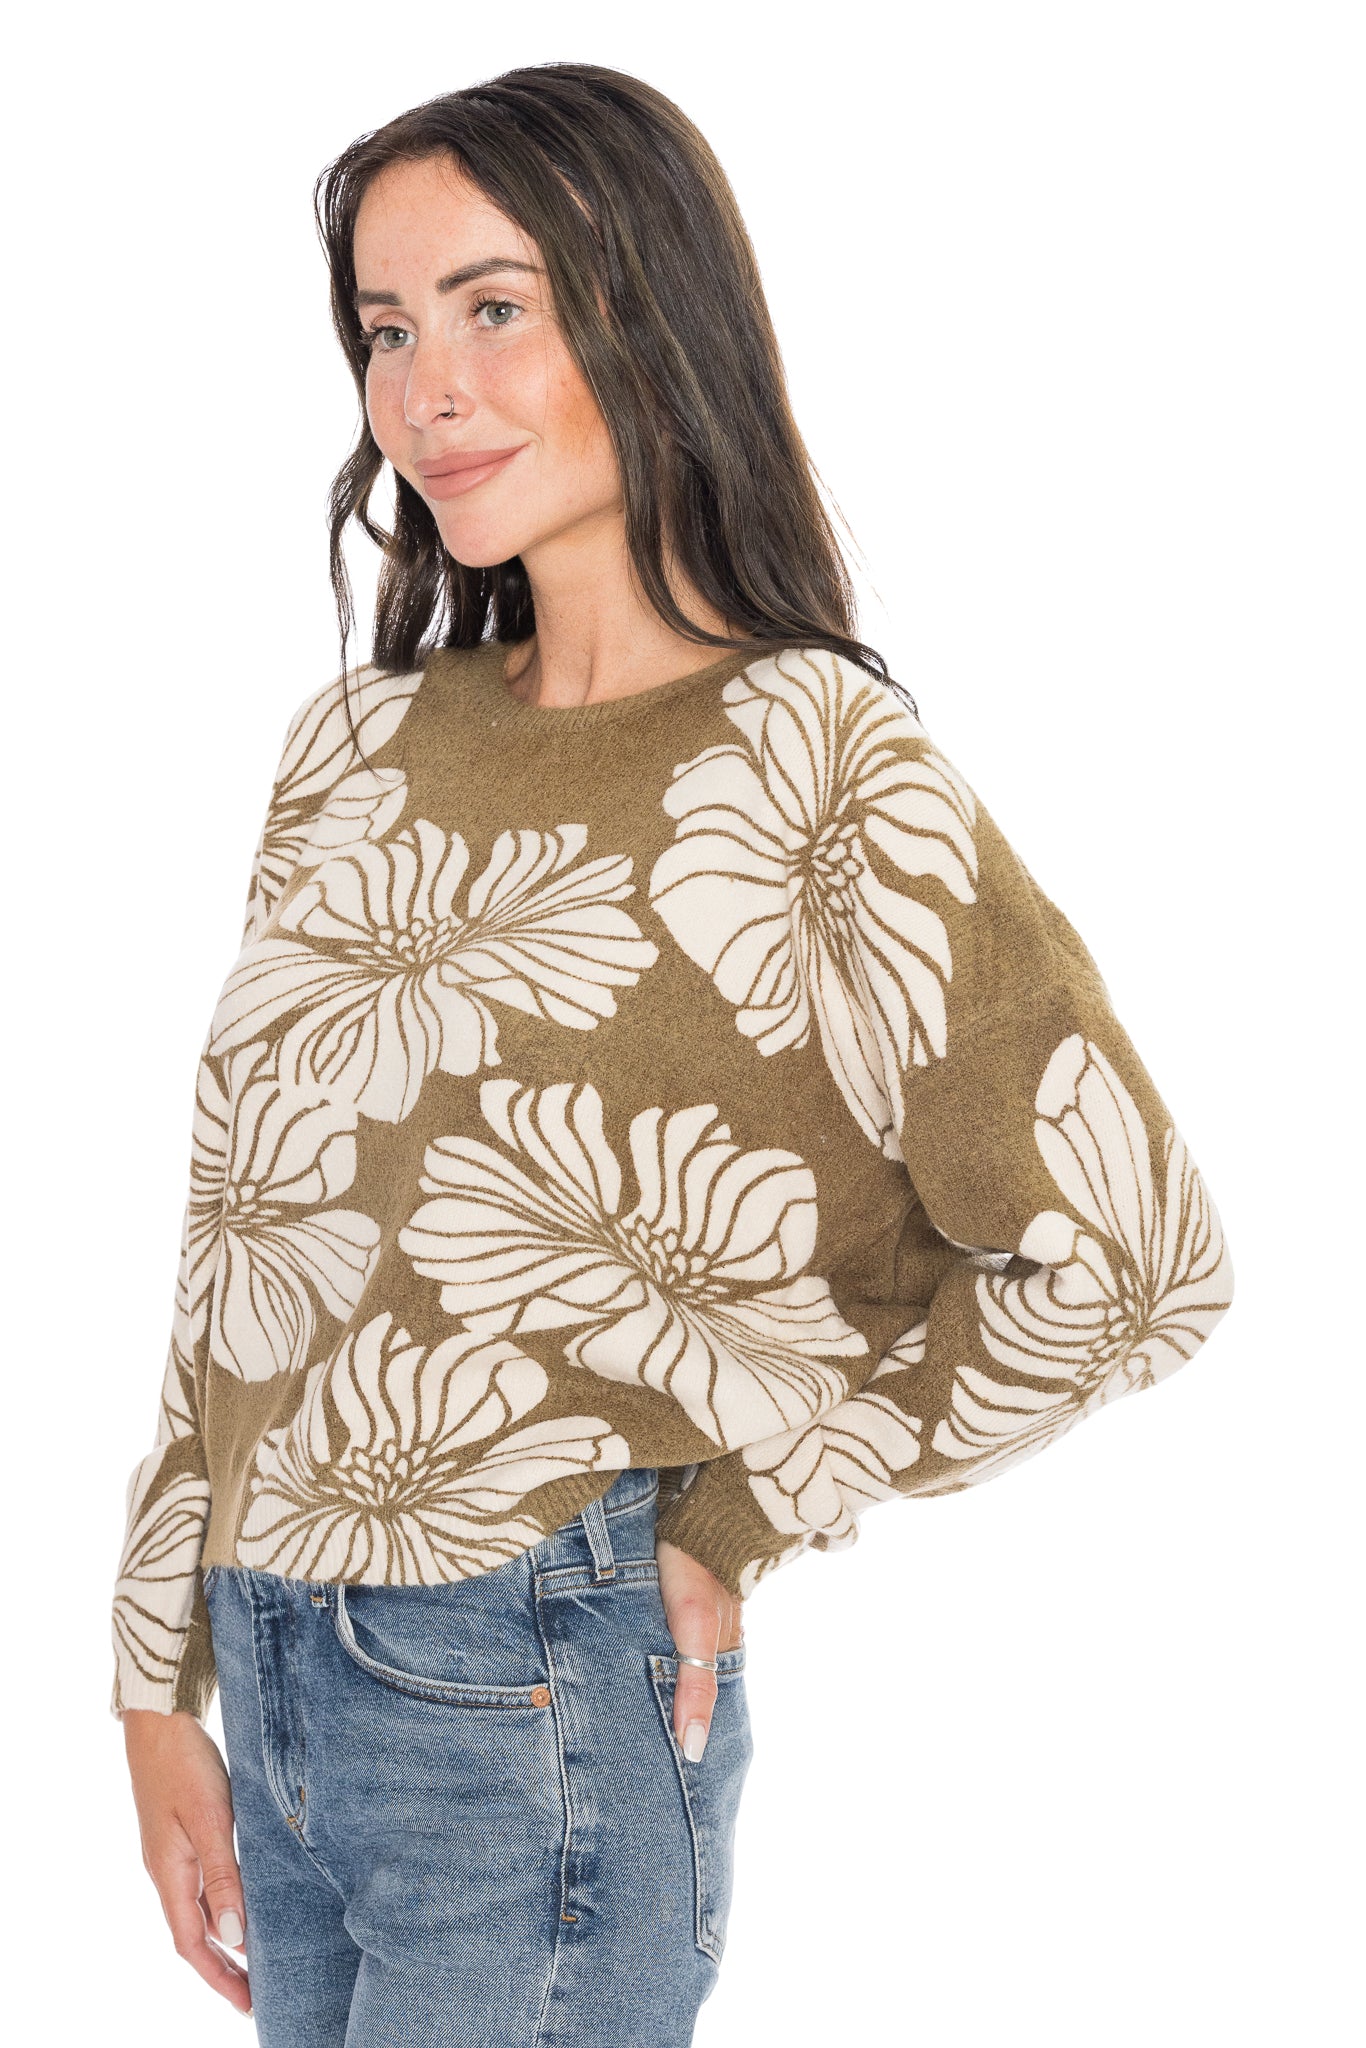 Ganna Sweater by Saltwater Luxe